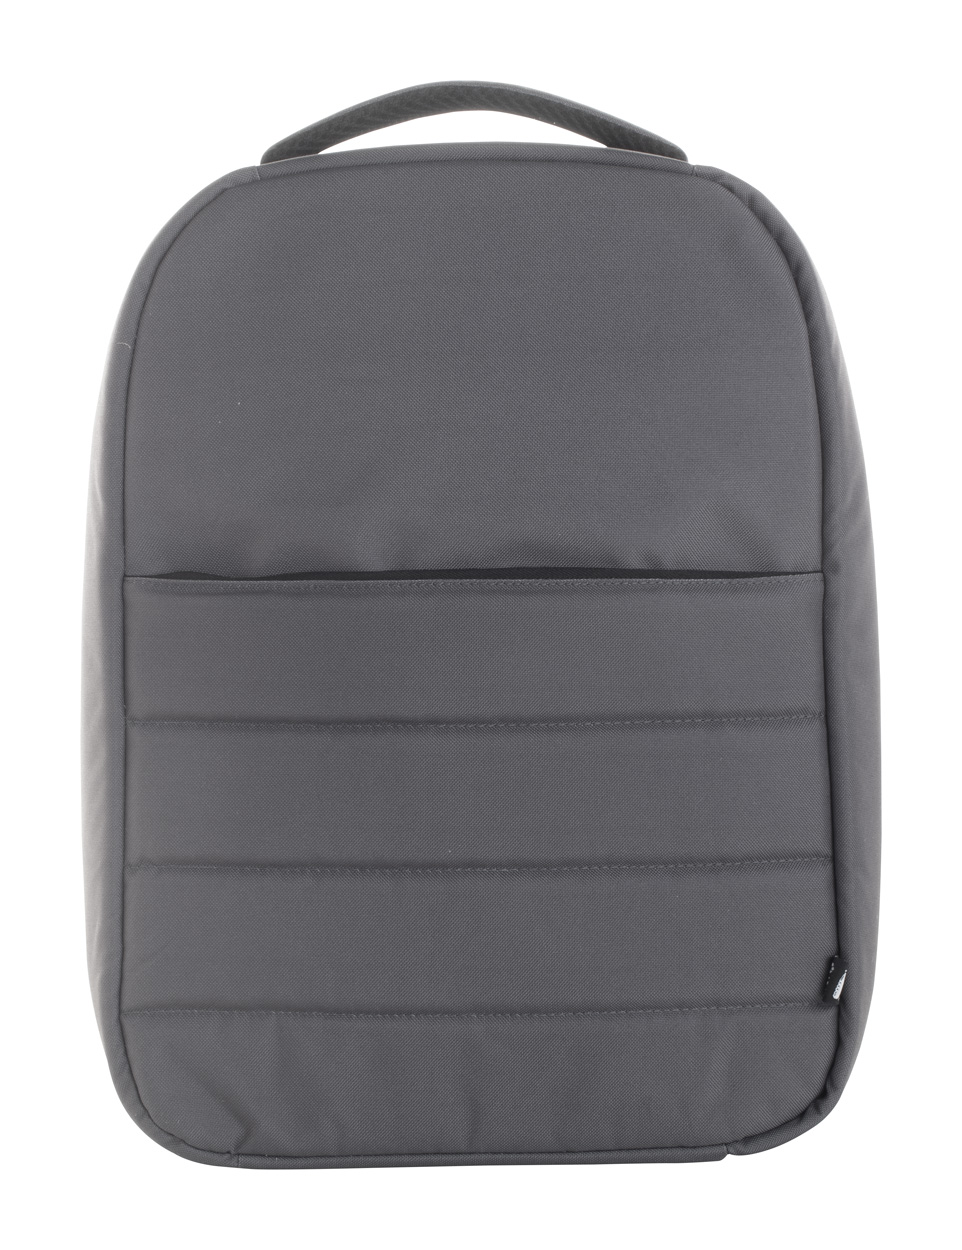 Danium RPET backpack - silver